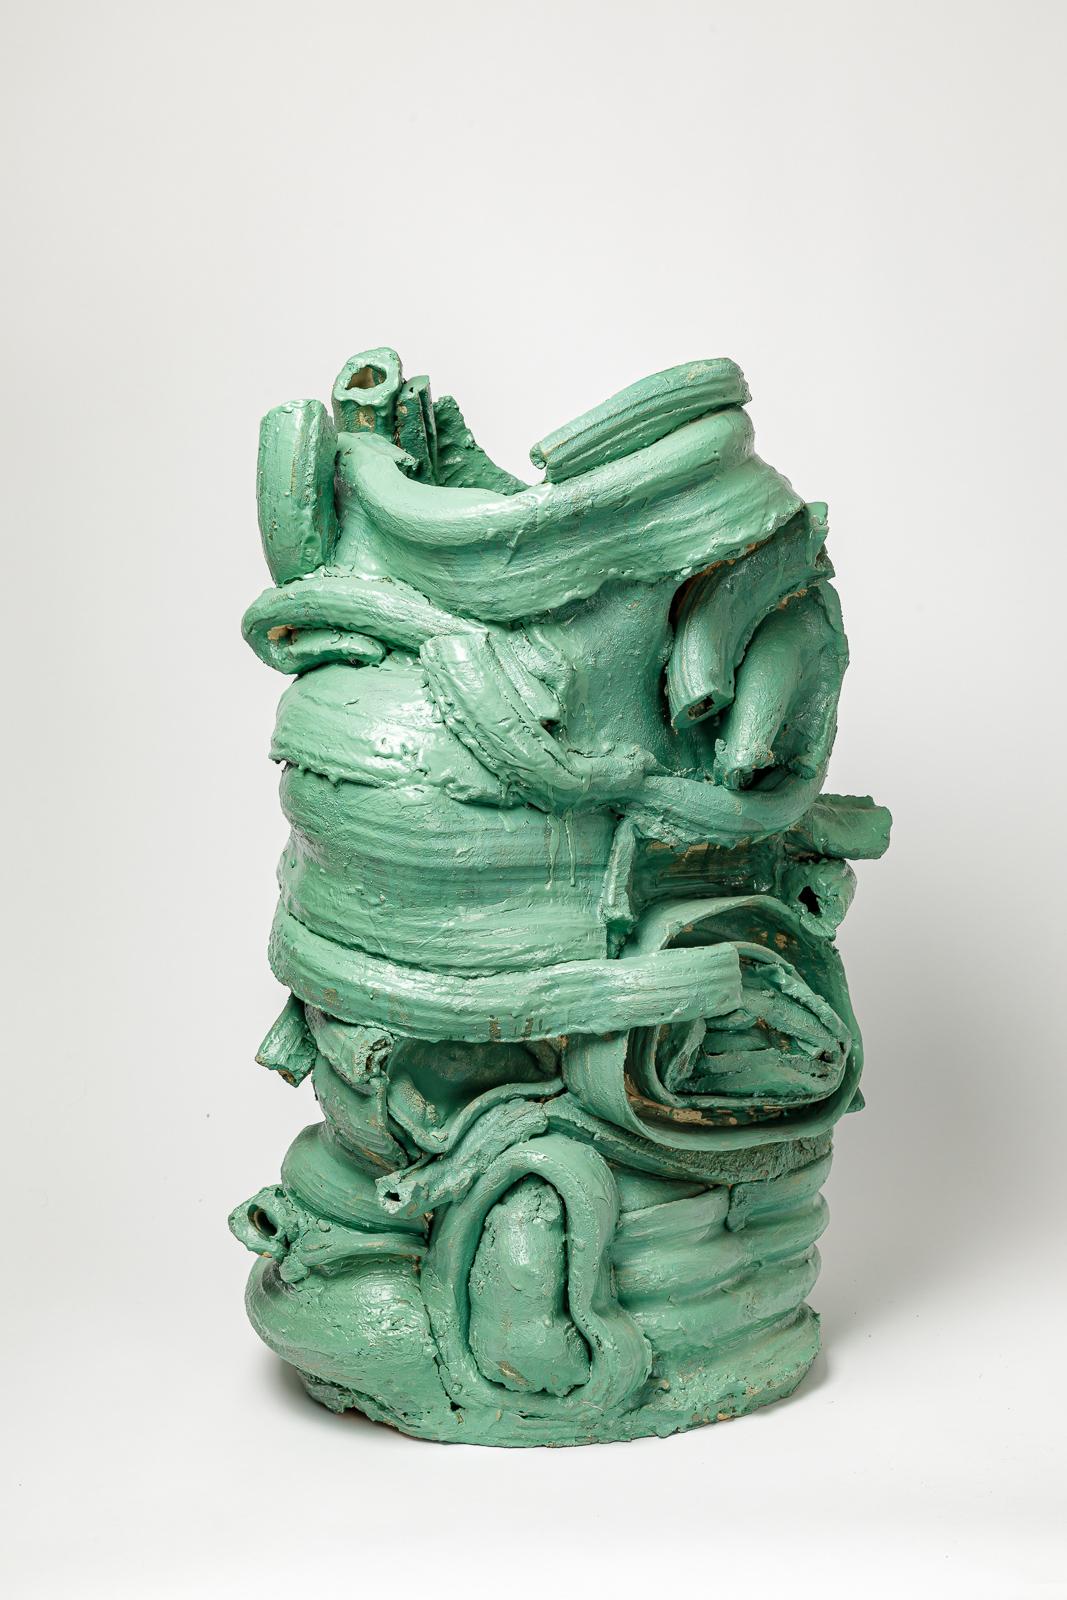 French Large floor vase in green glazed ceramic by Patrick Crulis, 2023.